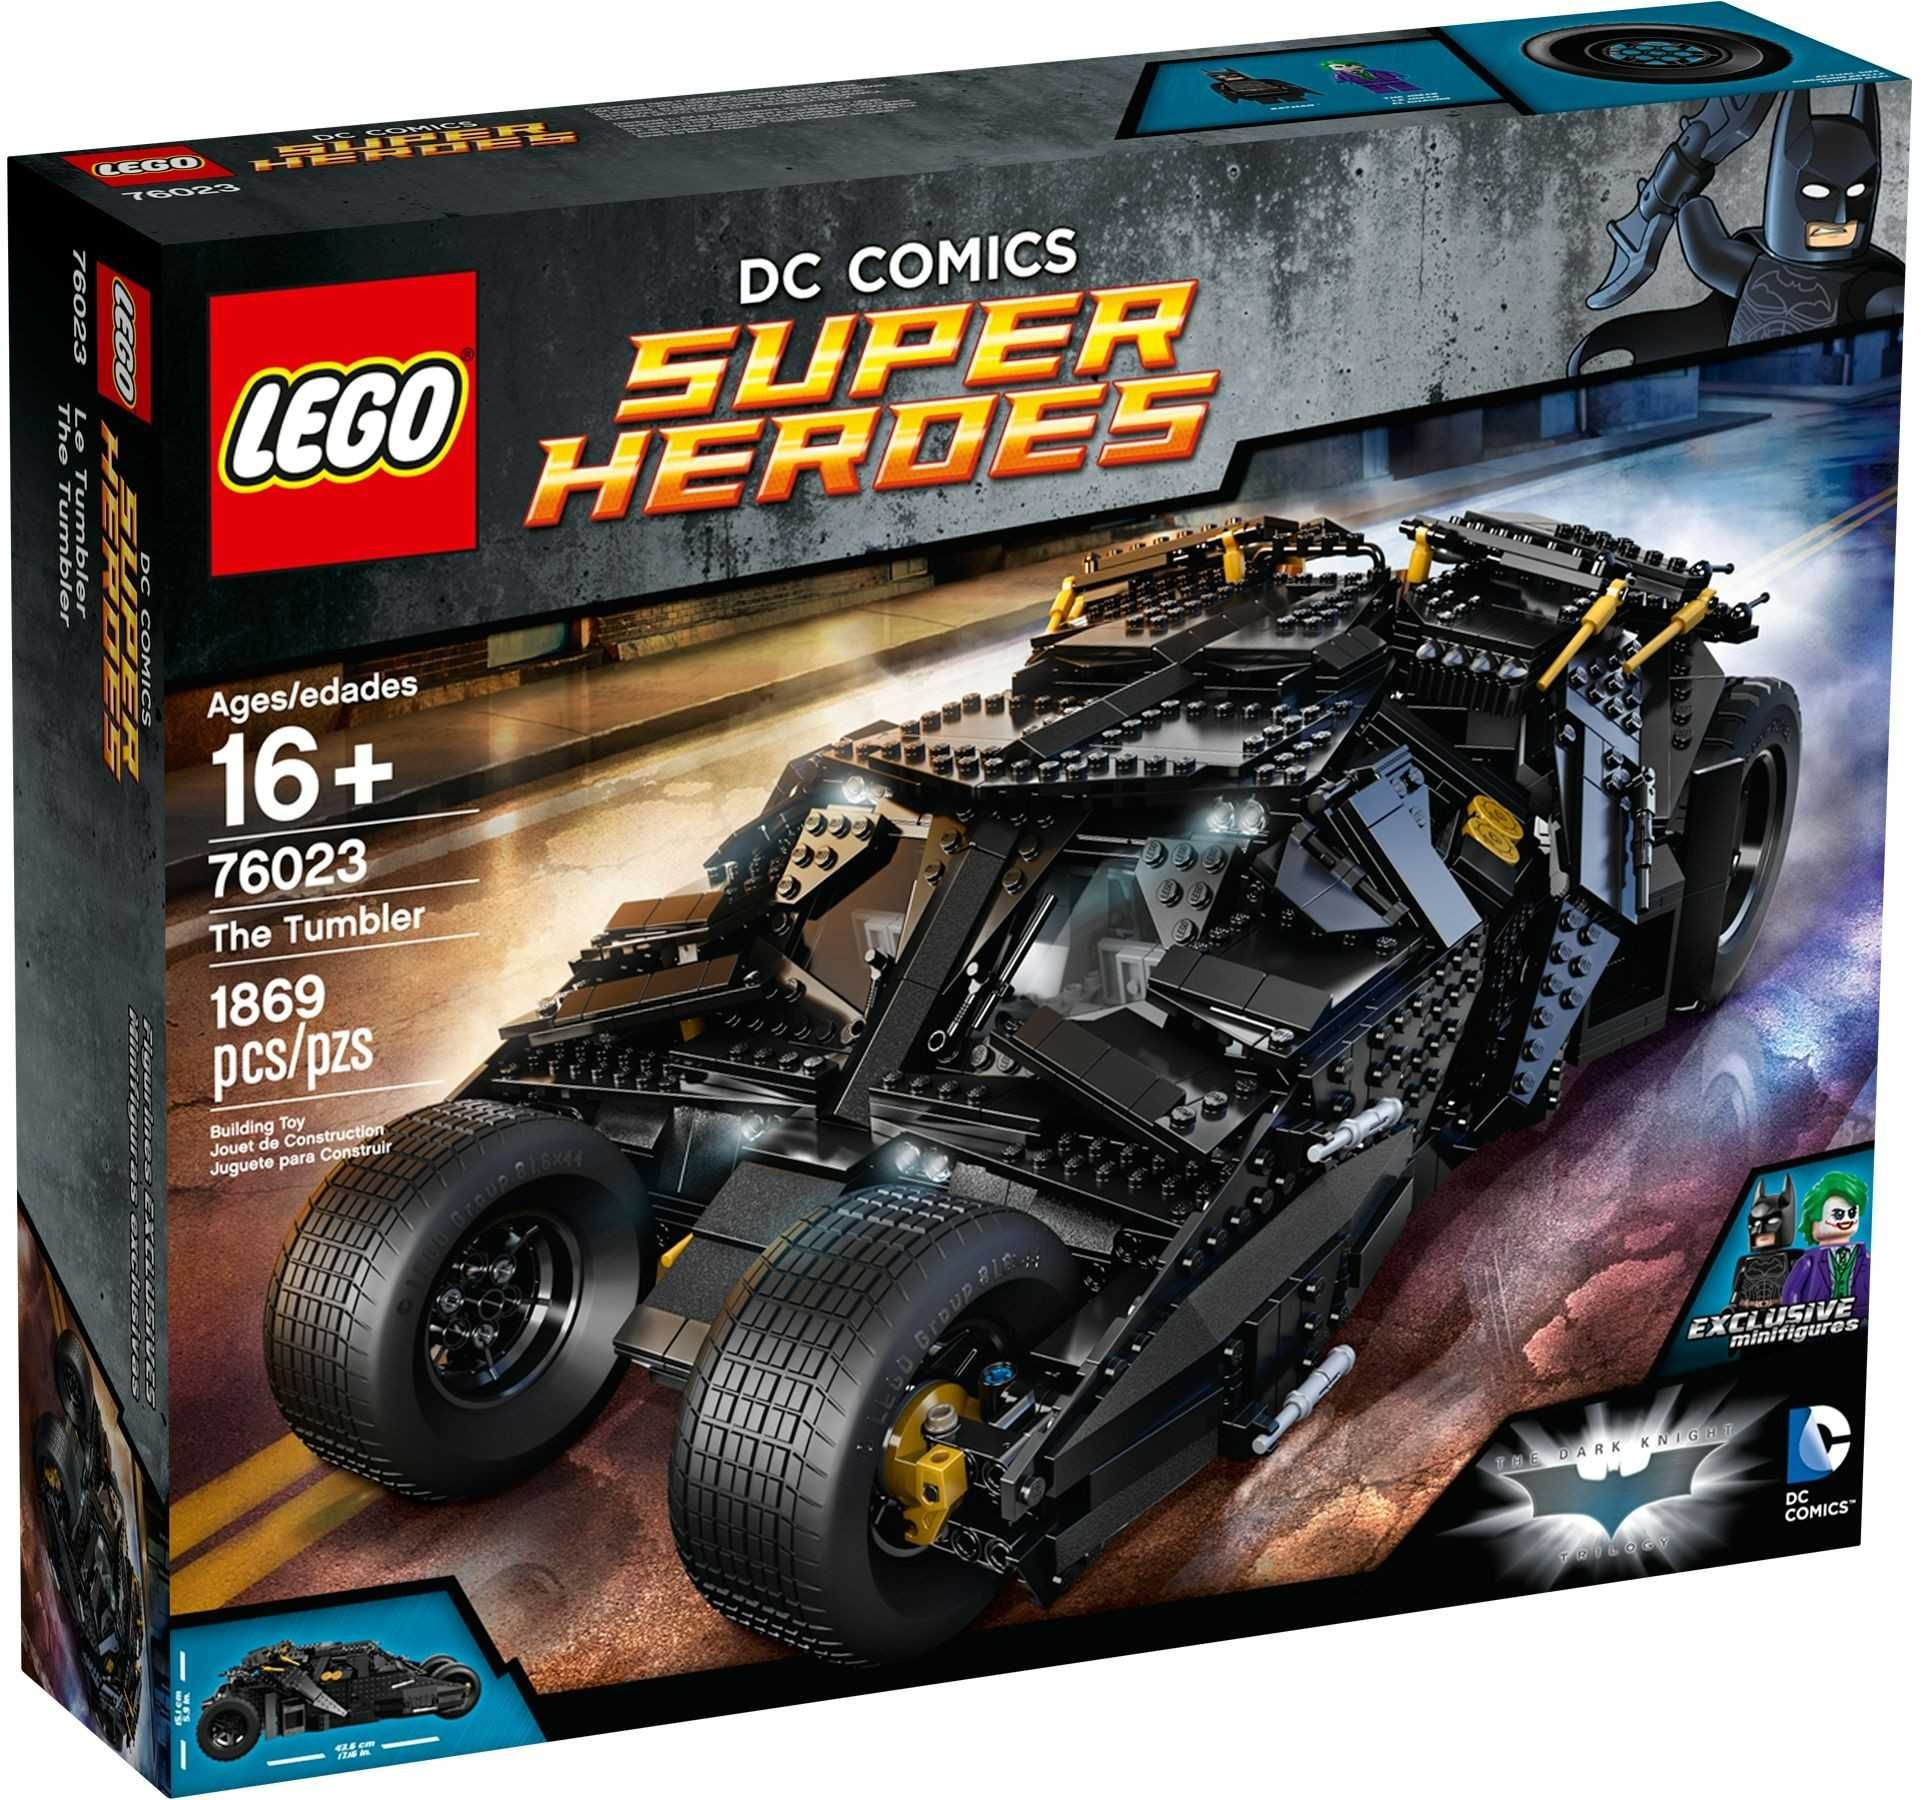 Lego Batman 7783; 7779; 76240 e 76023